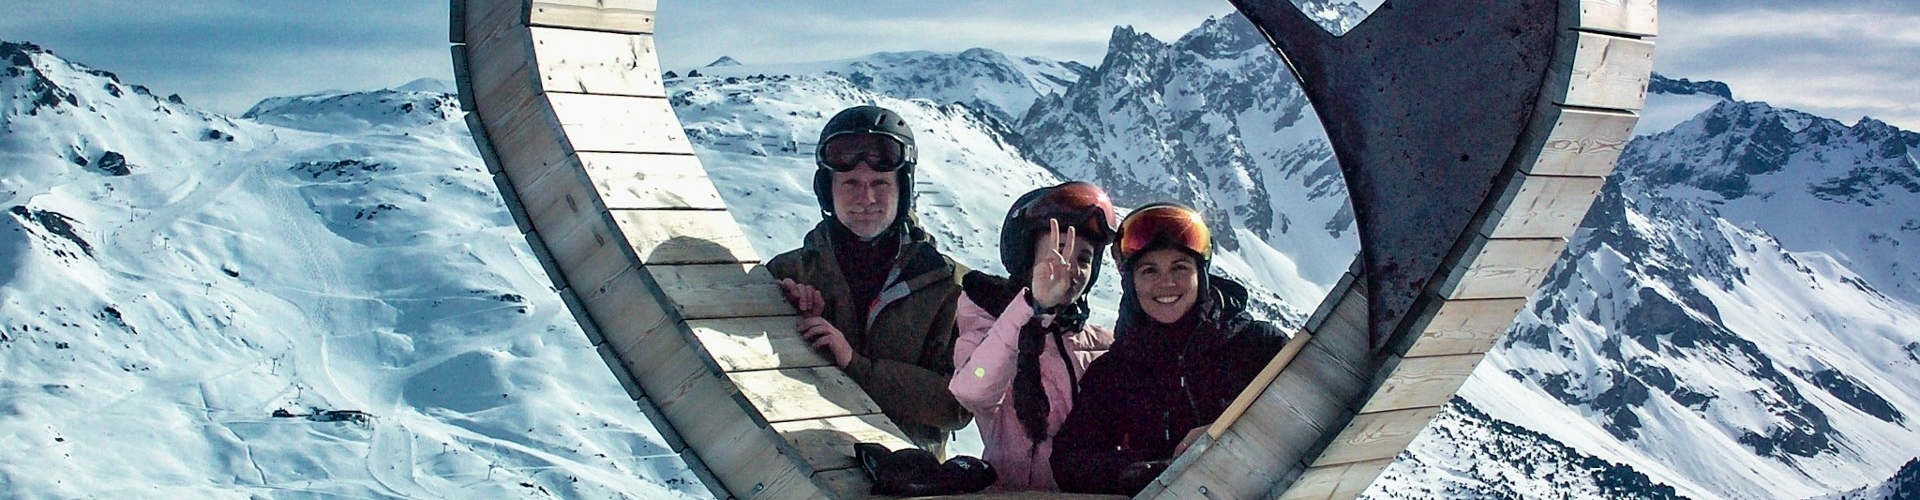 Les Trois Vallees Skien met kinderen